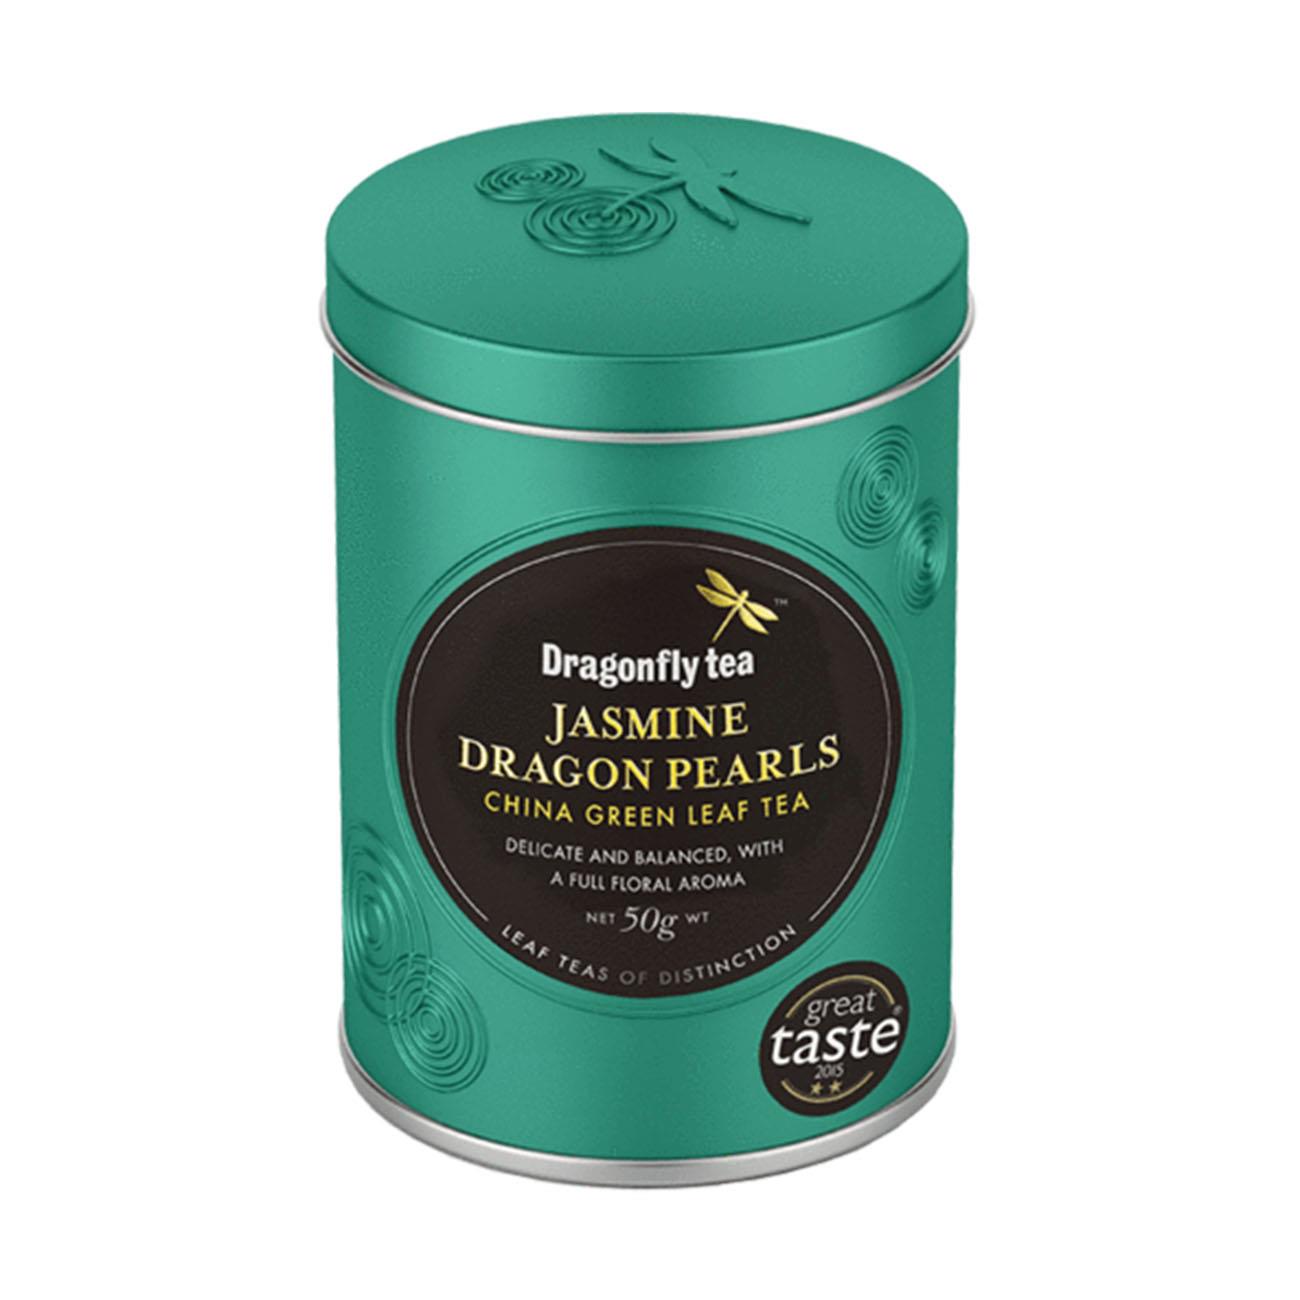 Jasmine Dragon Pearls Green Leaf Tea 50g